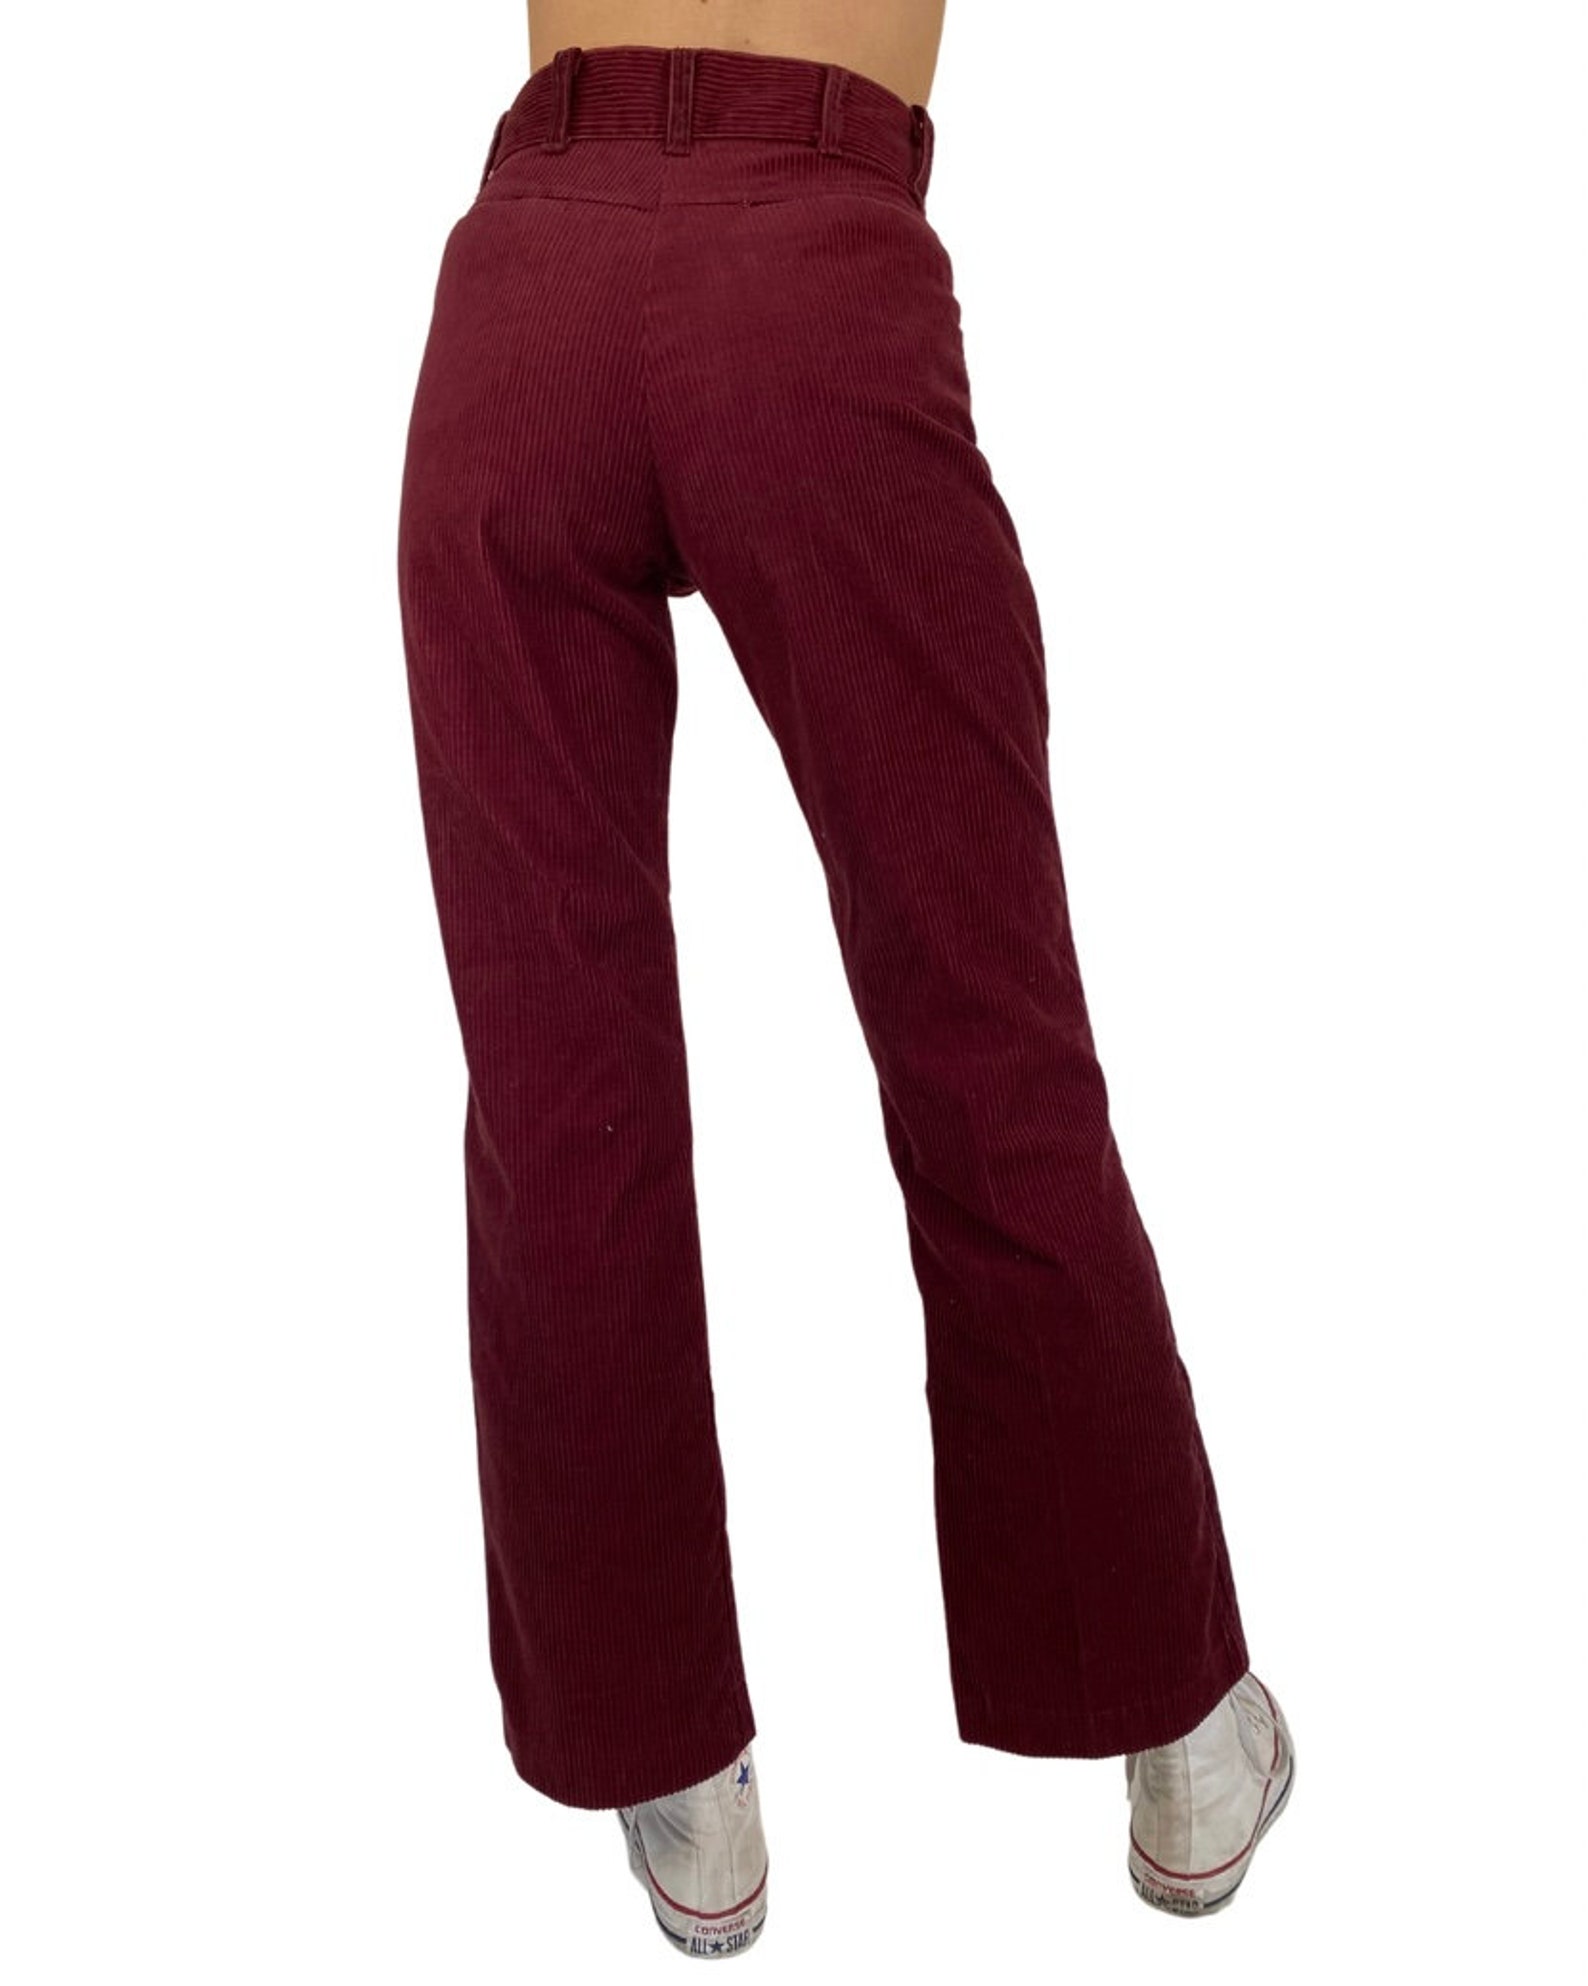 Vintage JCPenny Corduroy Pants | Etsy